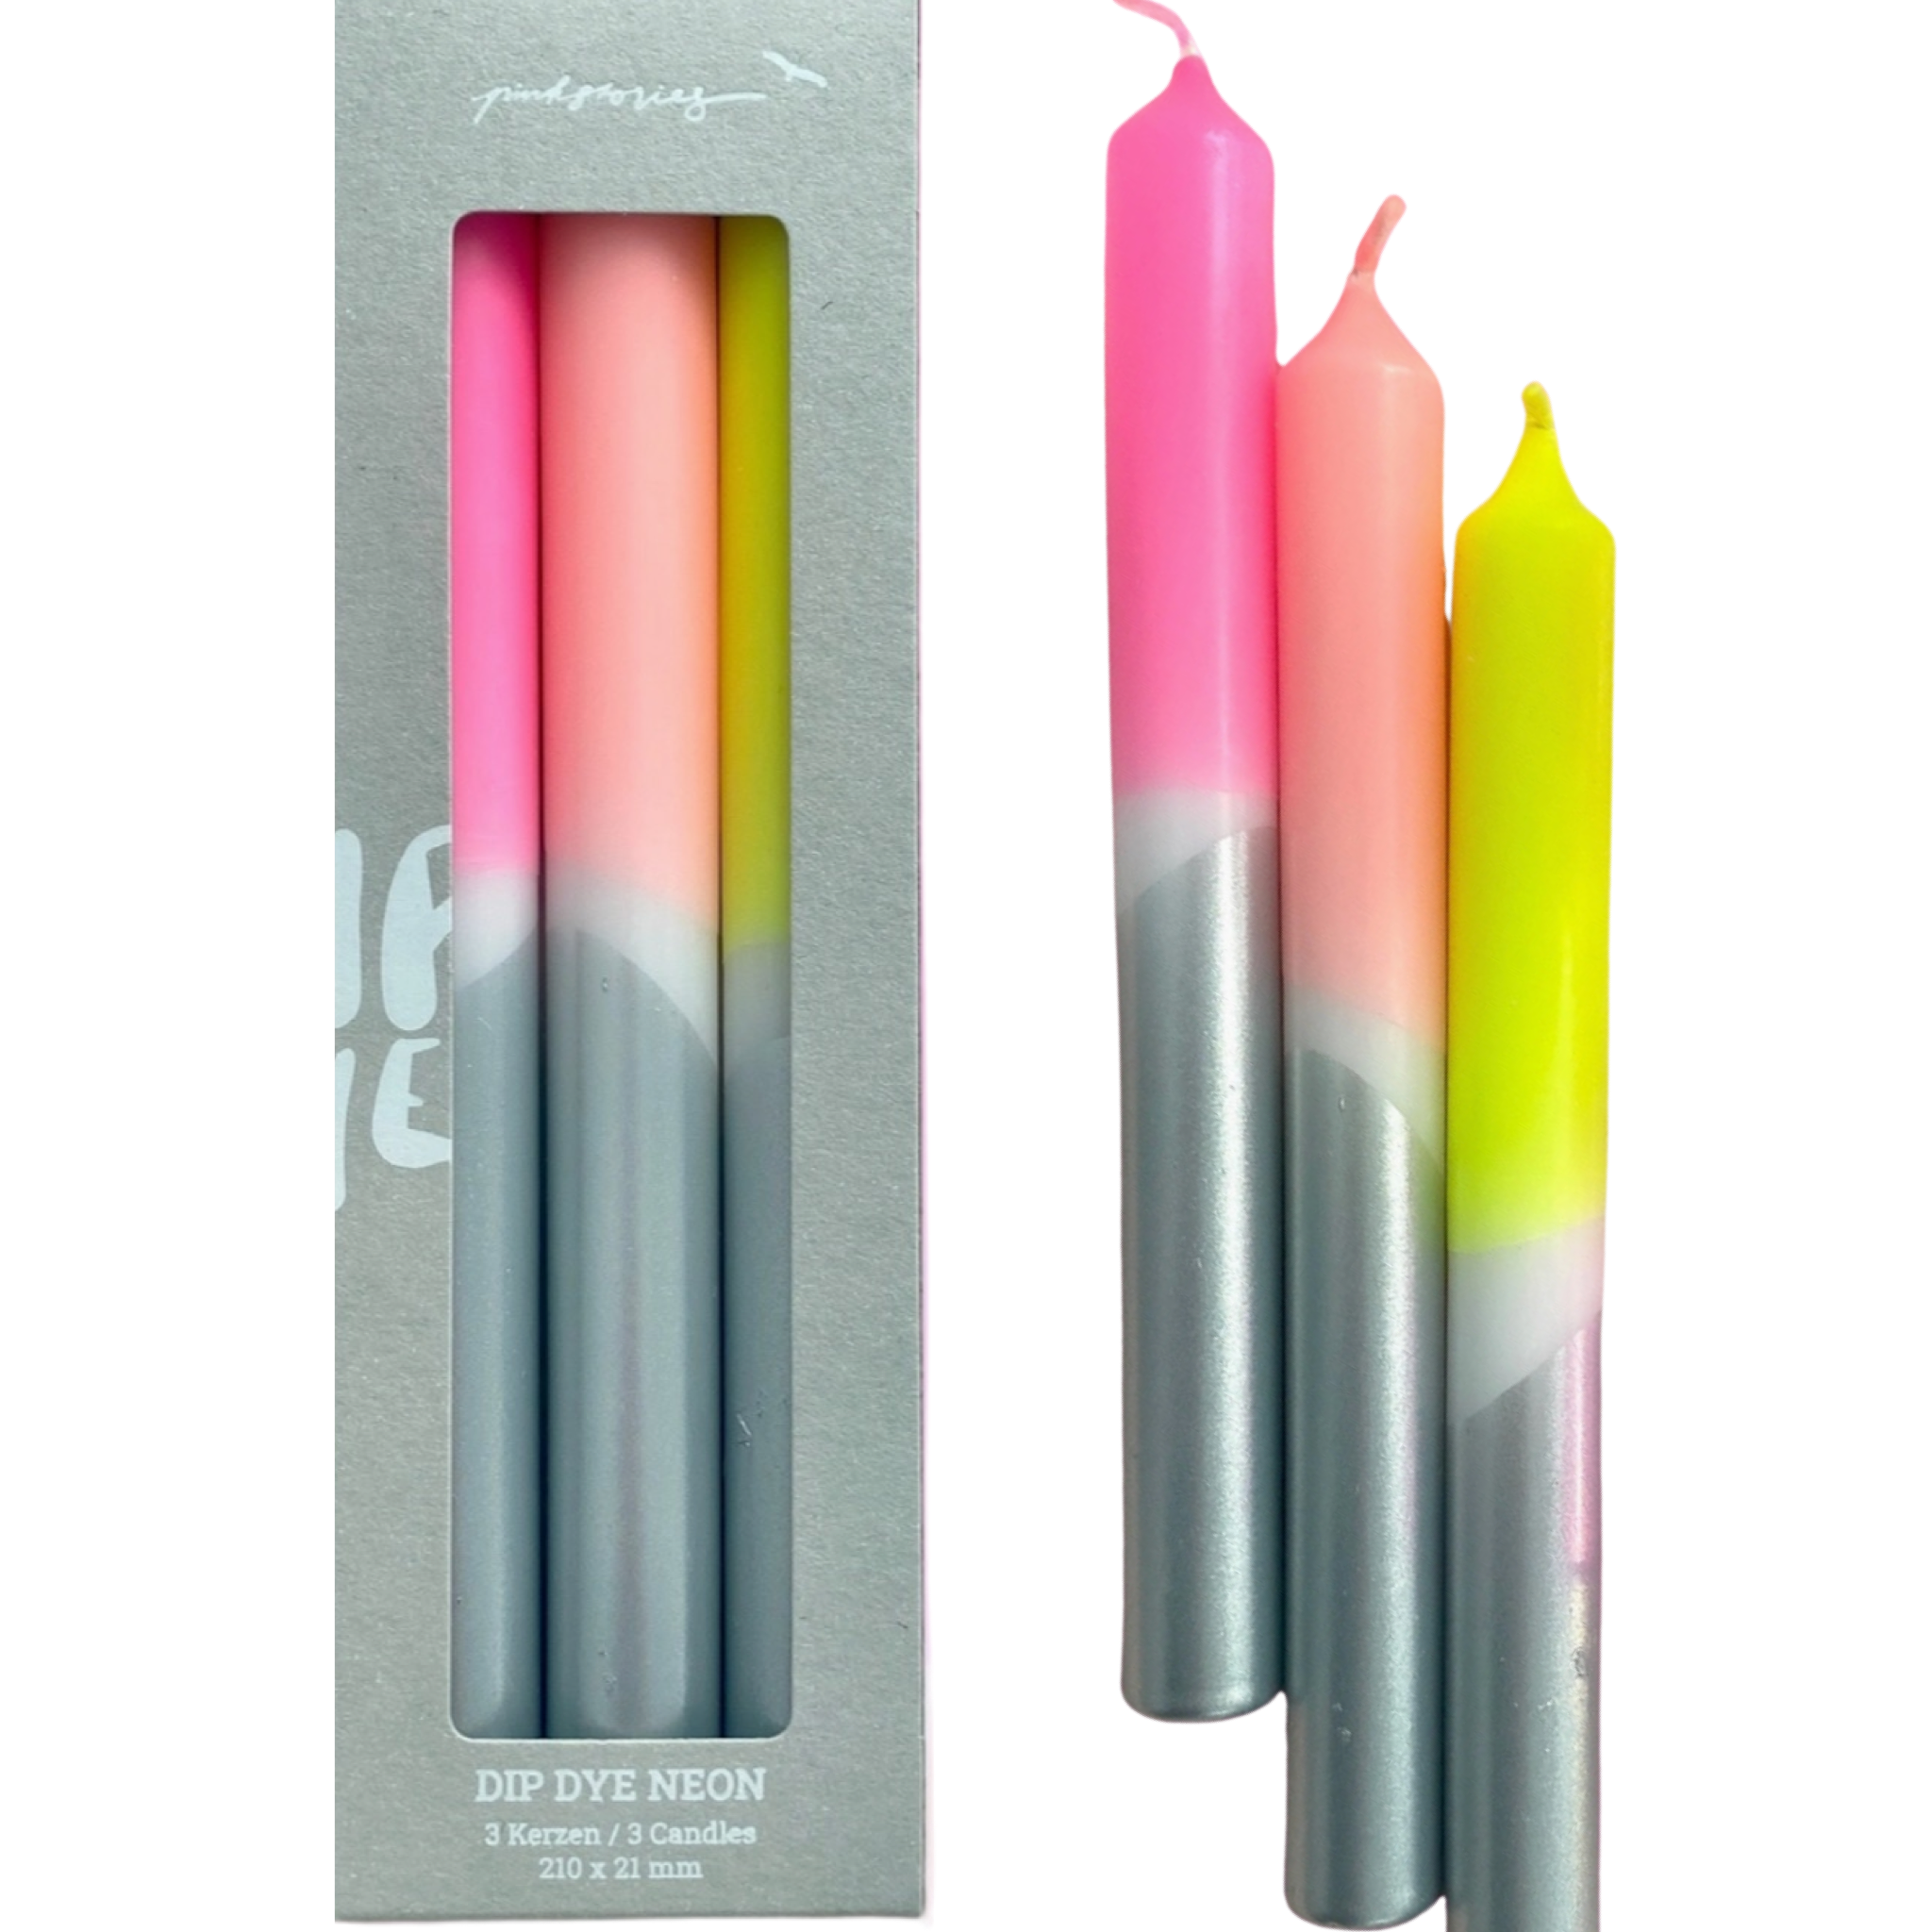 Lithium Dip Dye Glossy Candles